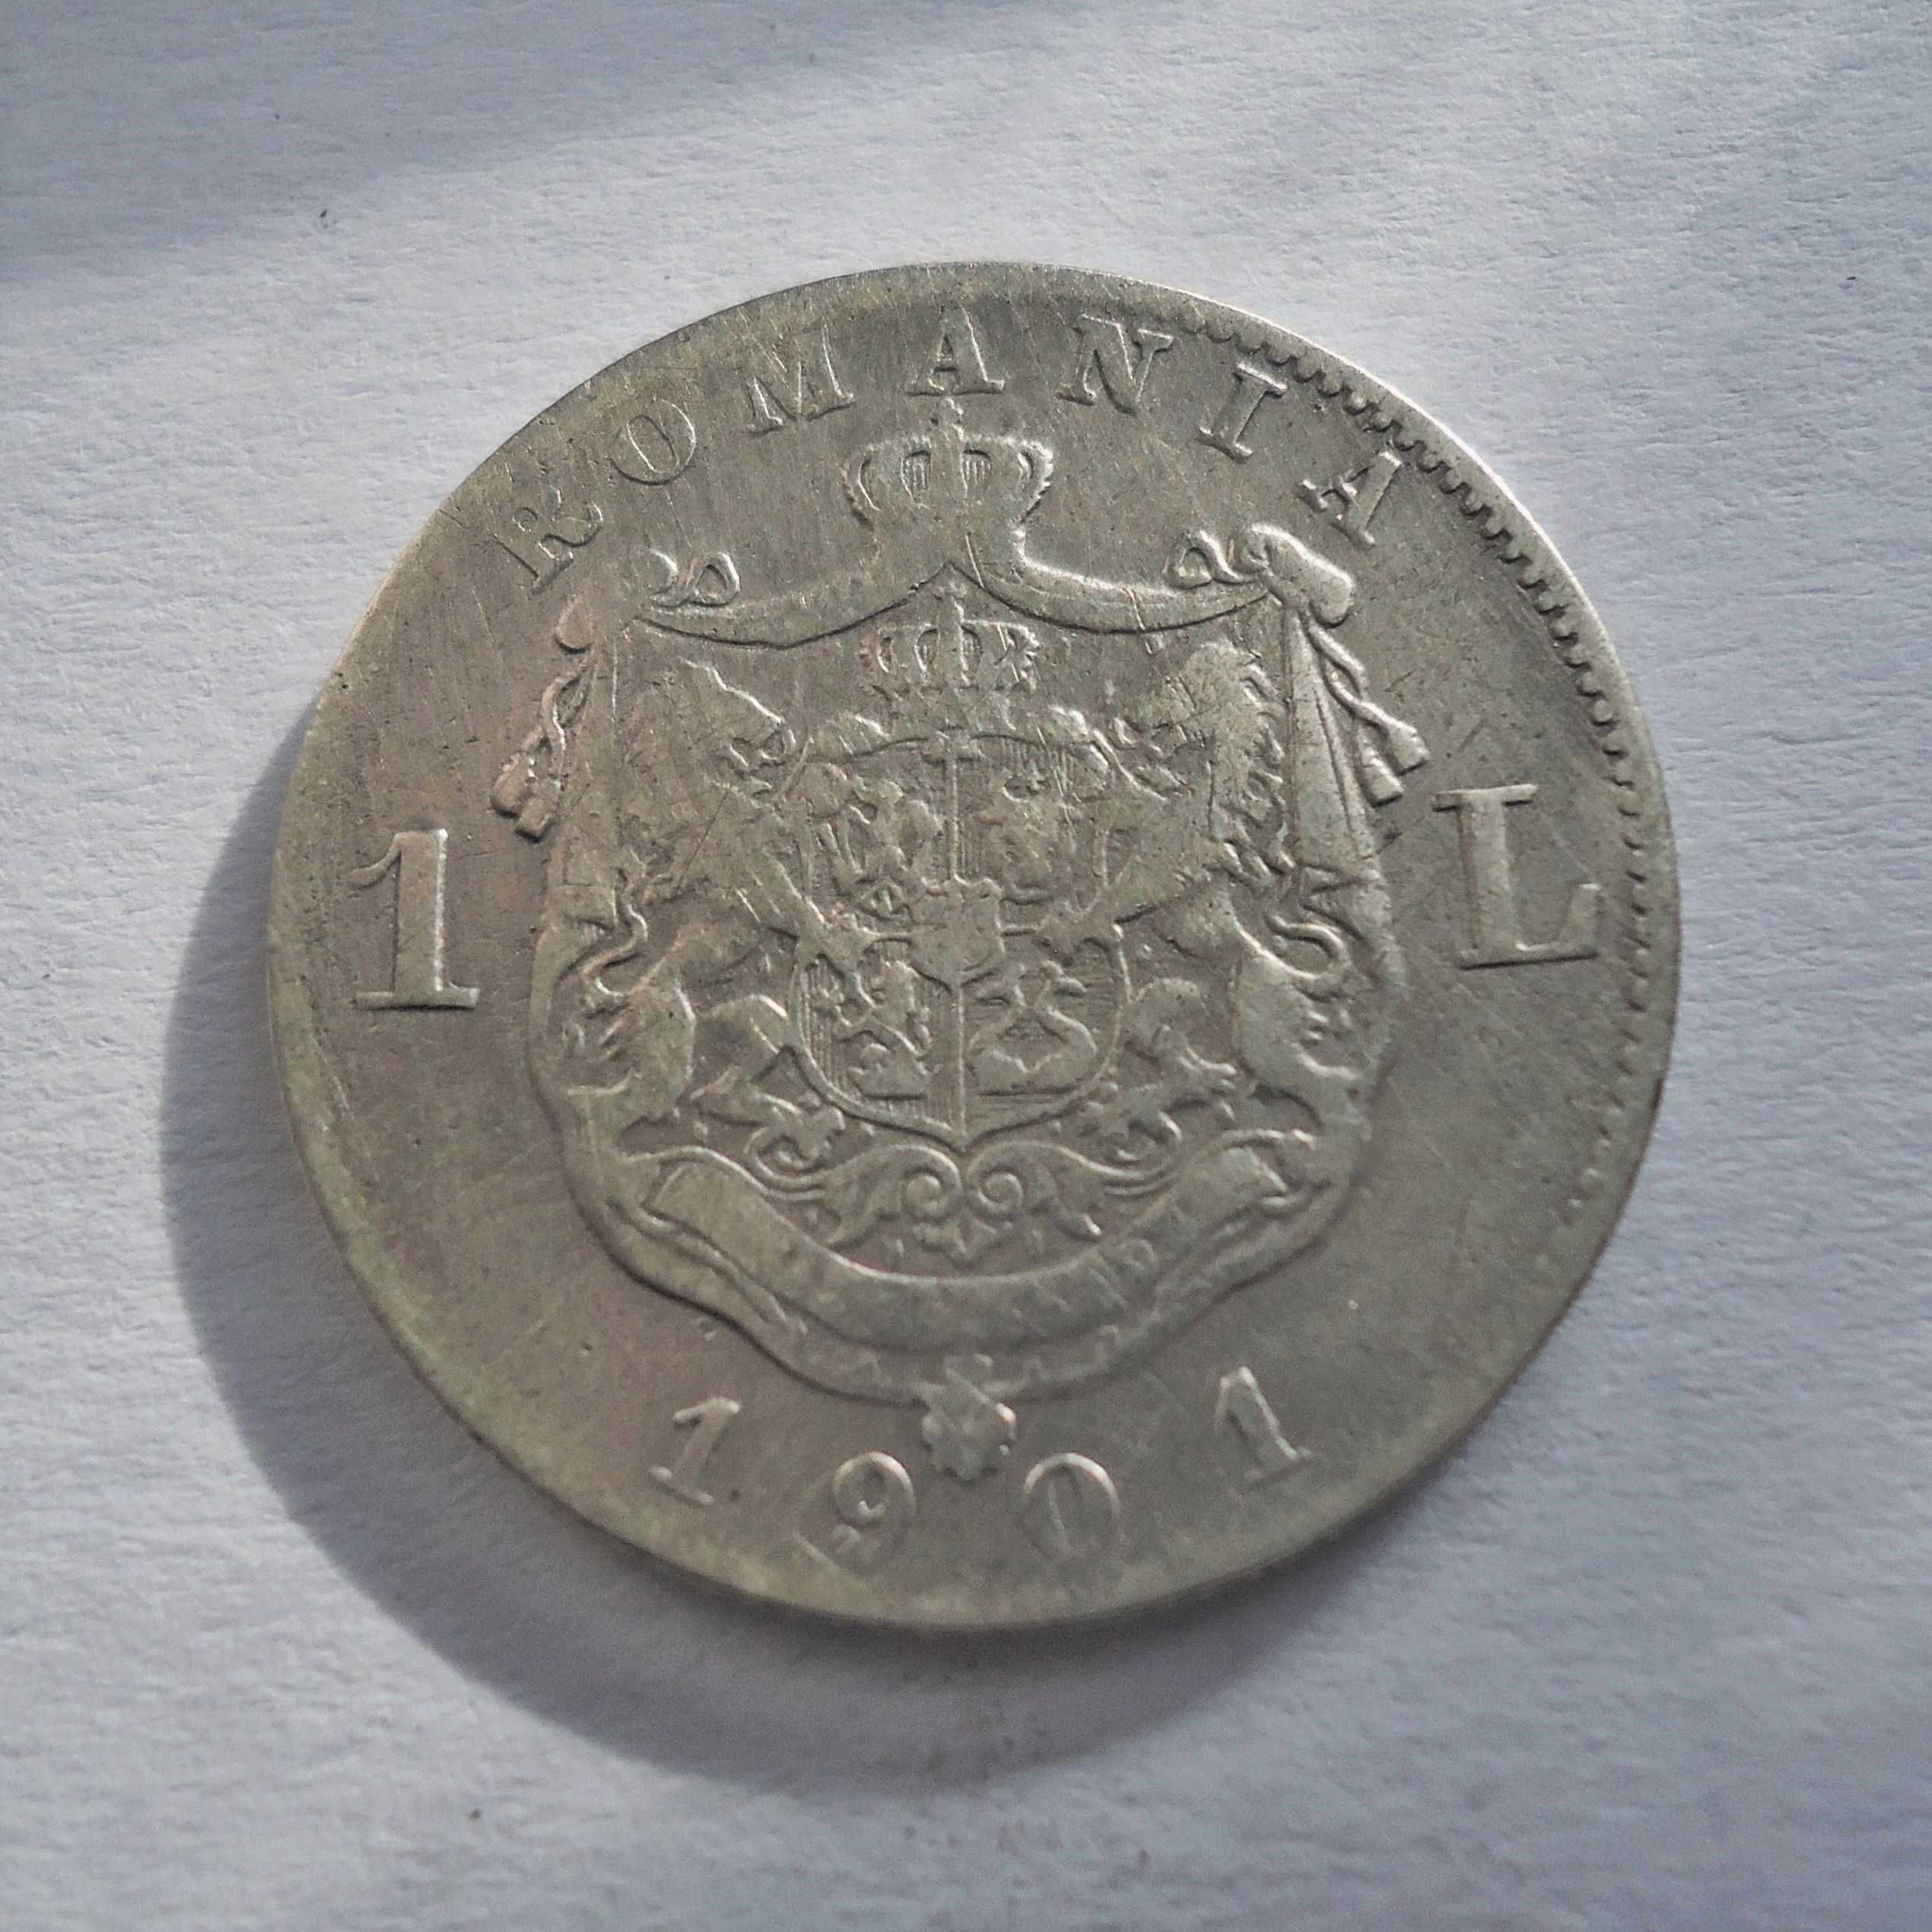 Monede din argint 1 leu 1901 România regele Carol I rare